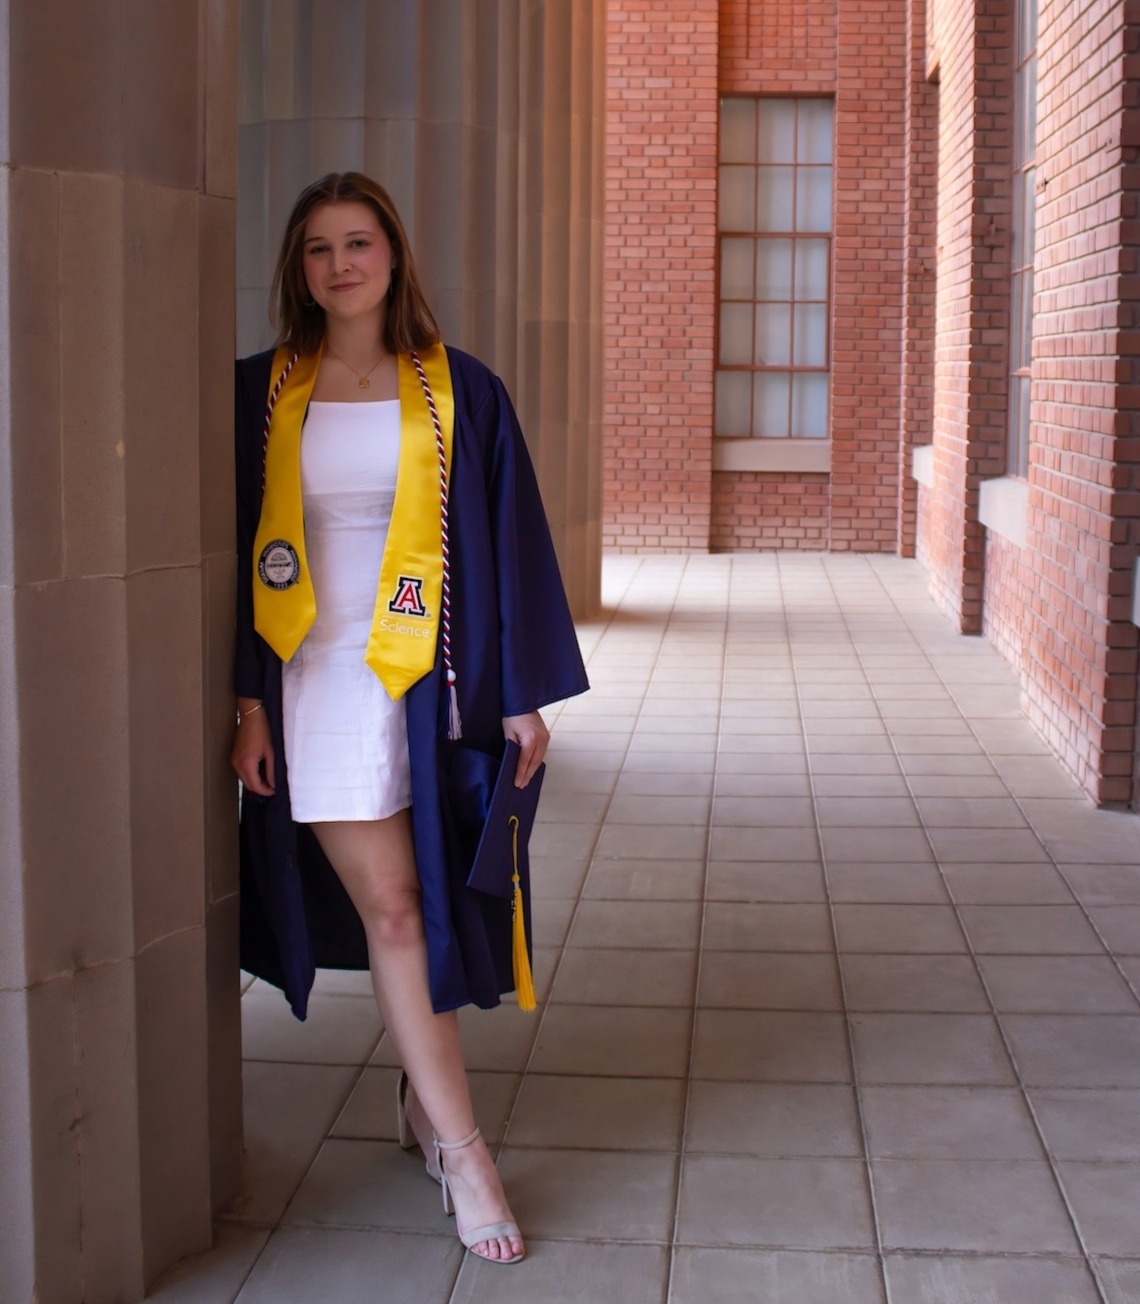 Clare Hotze wearing a graduation gown